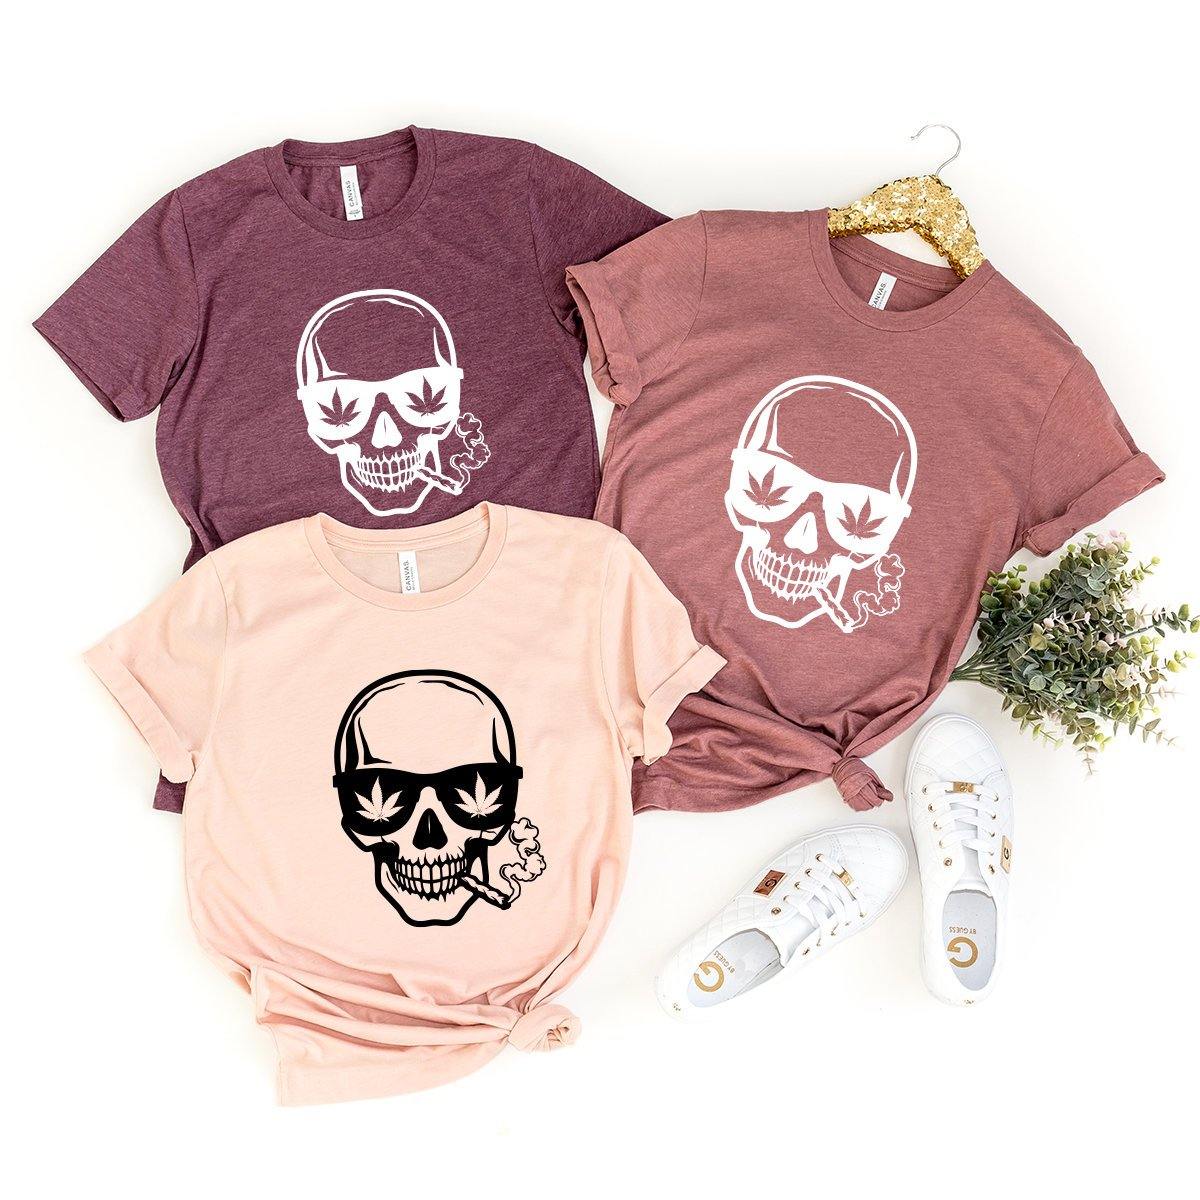 Skull Smoking Joint Shirt, Weed Shirt, Skull Smoking Weed Shirt, Funny Weed Shirt, Marijuana Shirt, Stoner Shirt, Cannabis Shirt, 420 Shirt - Fastdeliverytees.com